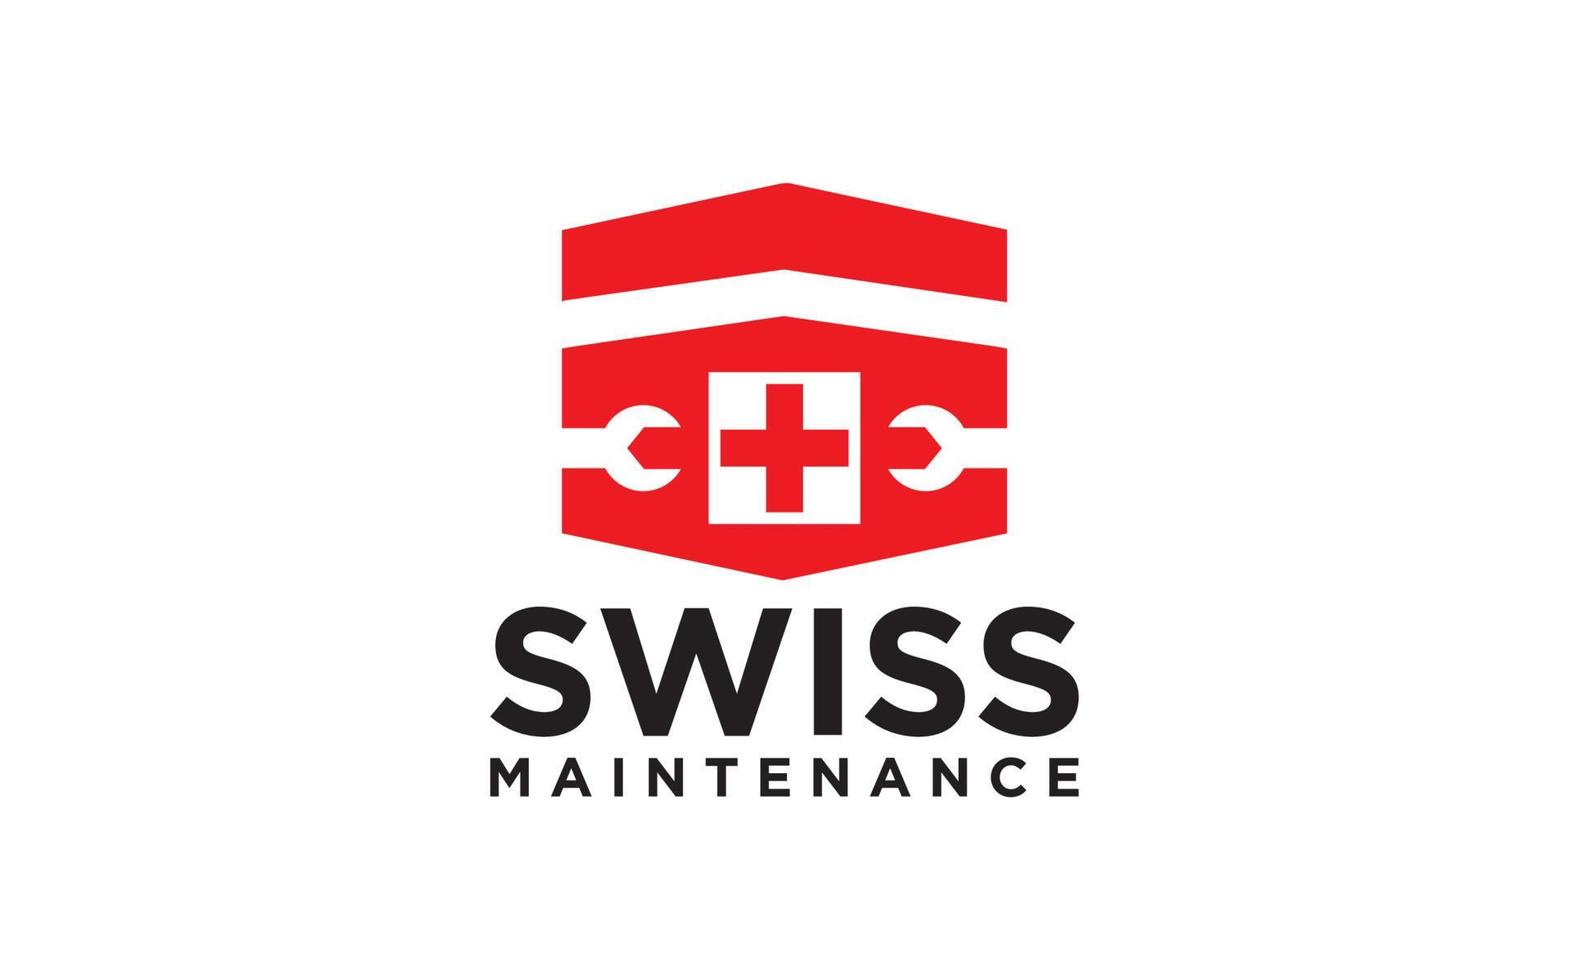 Swiss Service logo or label. Construction, repair vector illustration